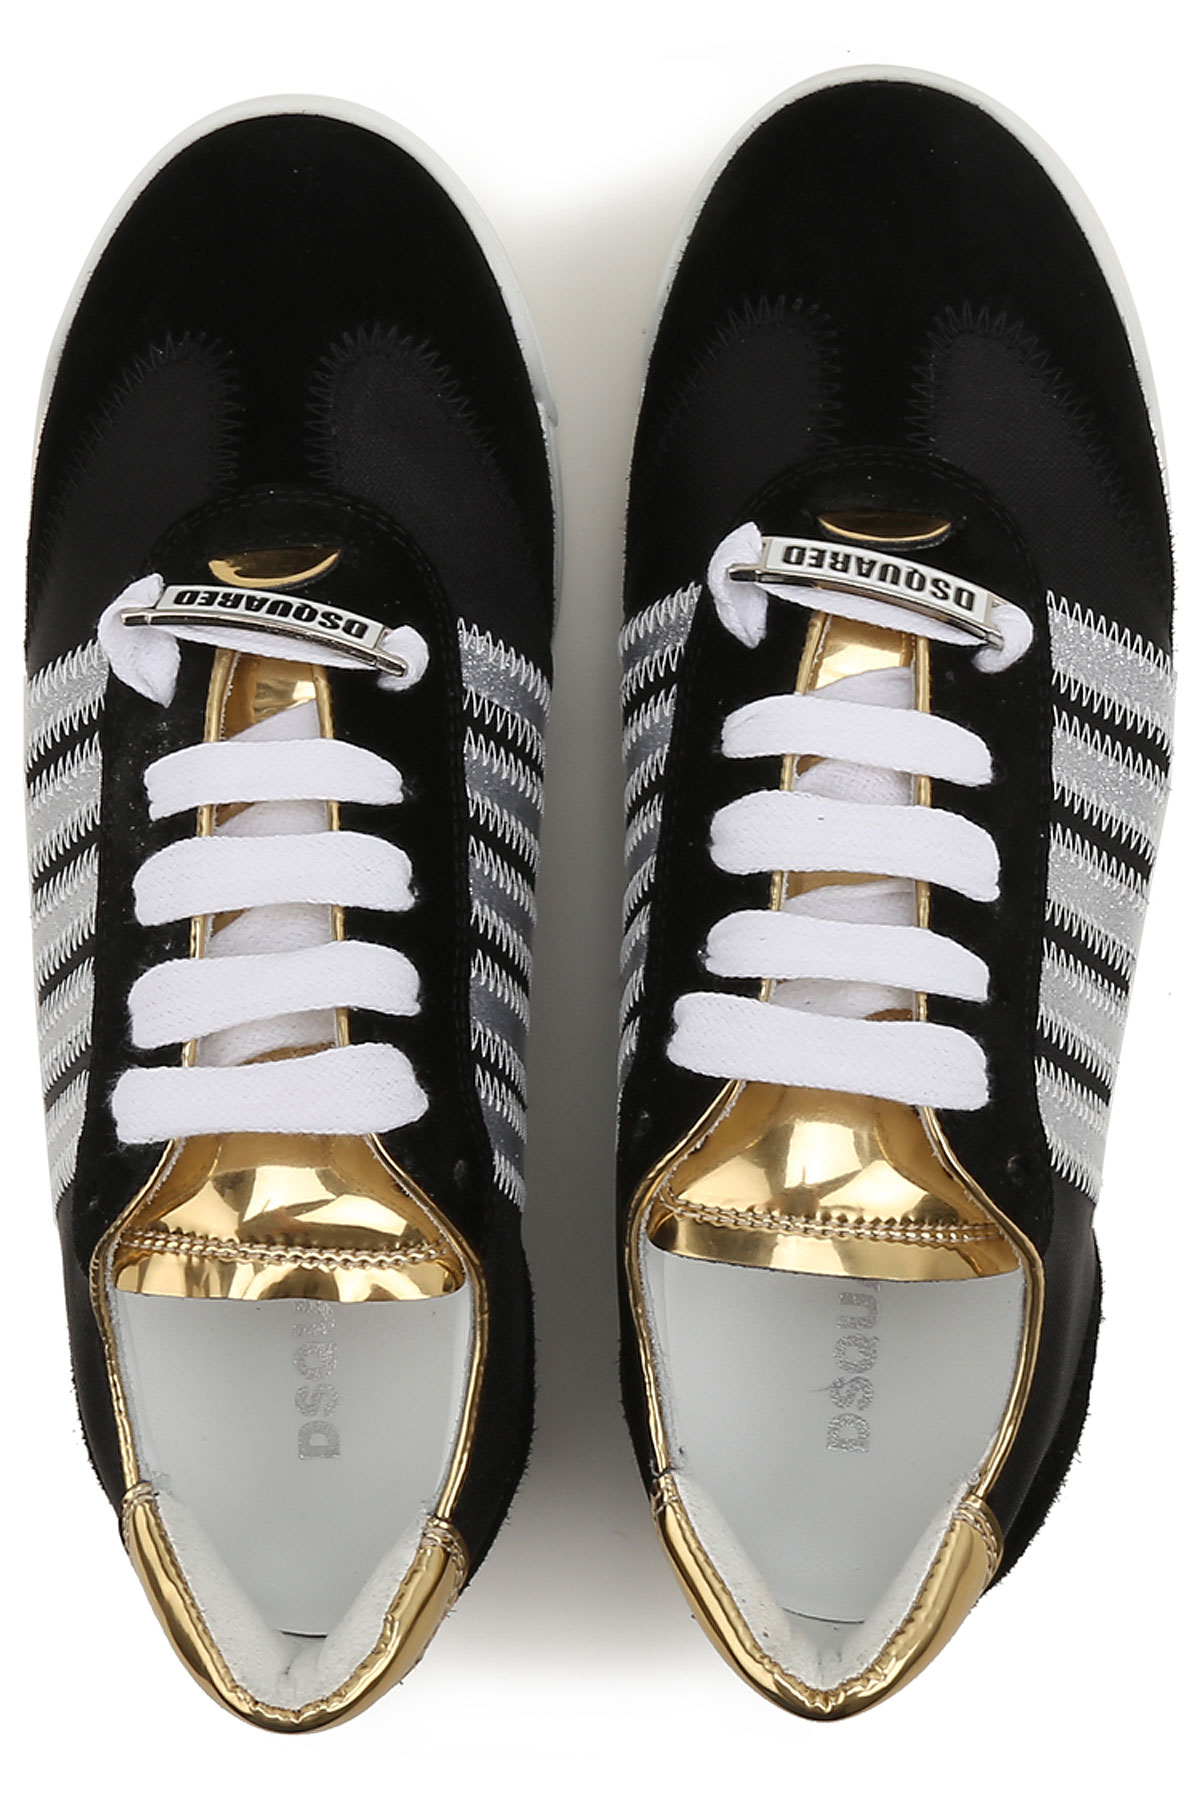 dsquared shoes black gold